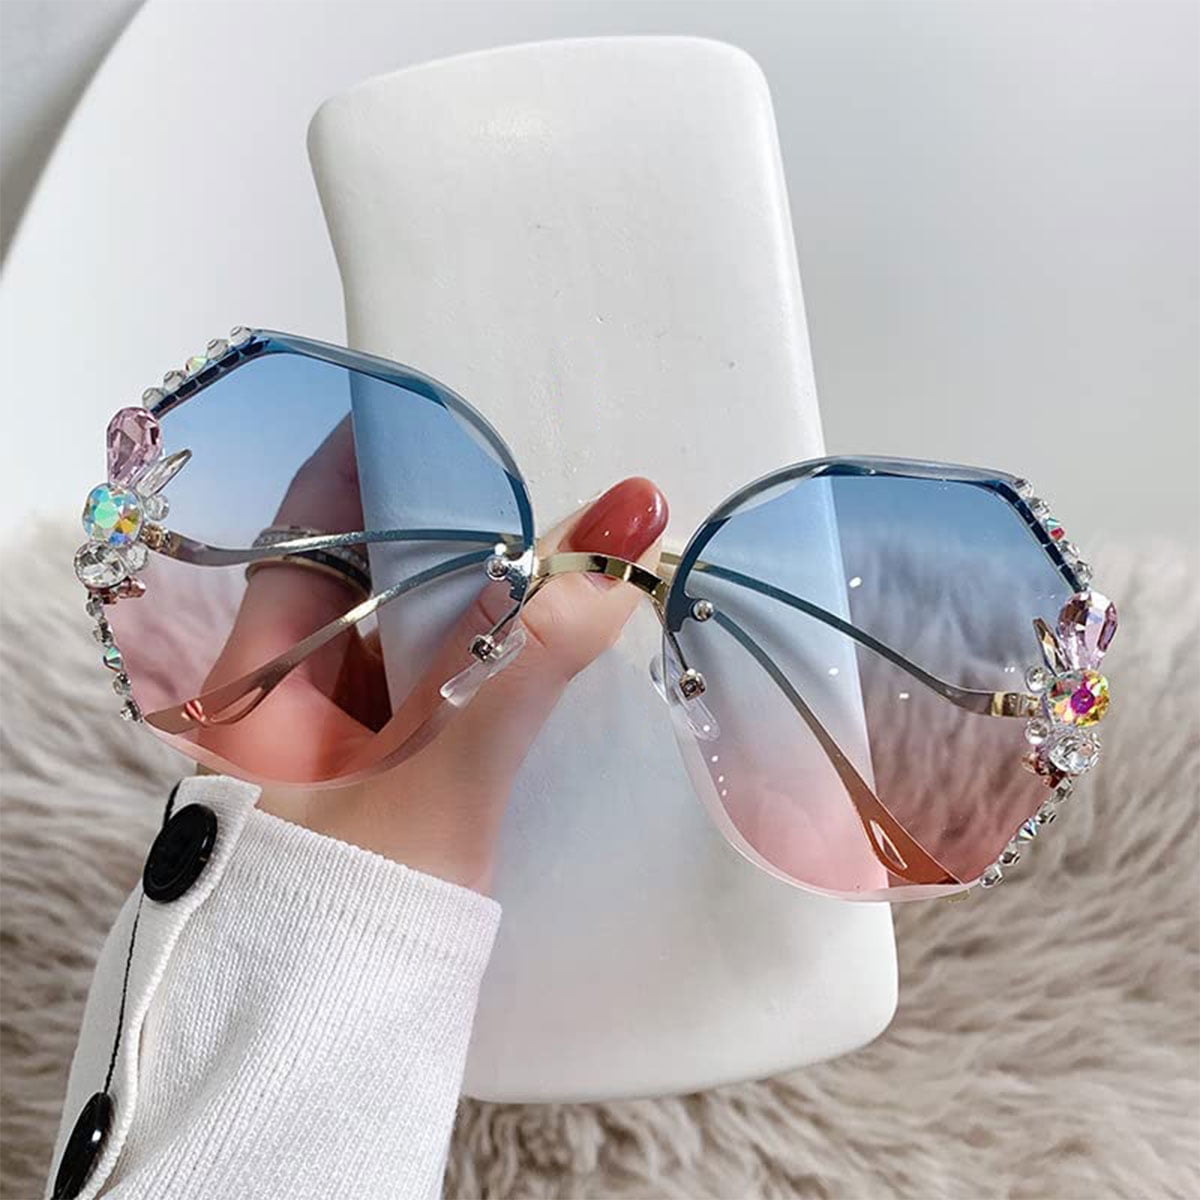 Jimmy Choo Pink Gradient Butterfly Ladies Sunglasses LETI/S 0VO1